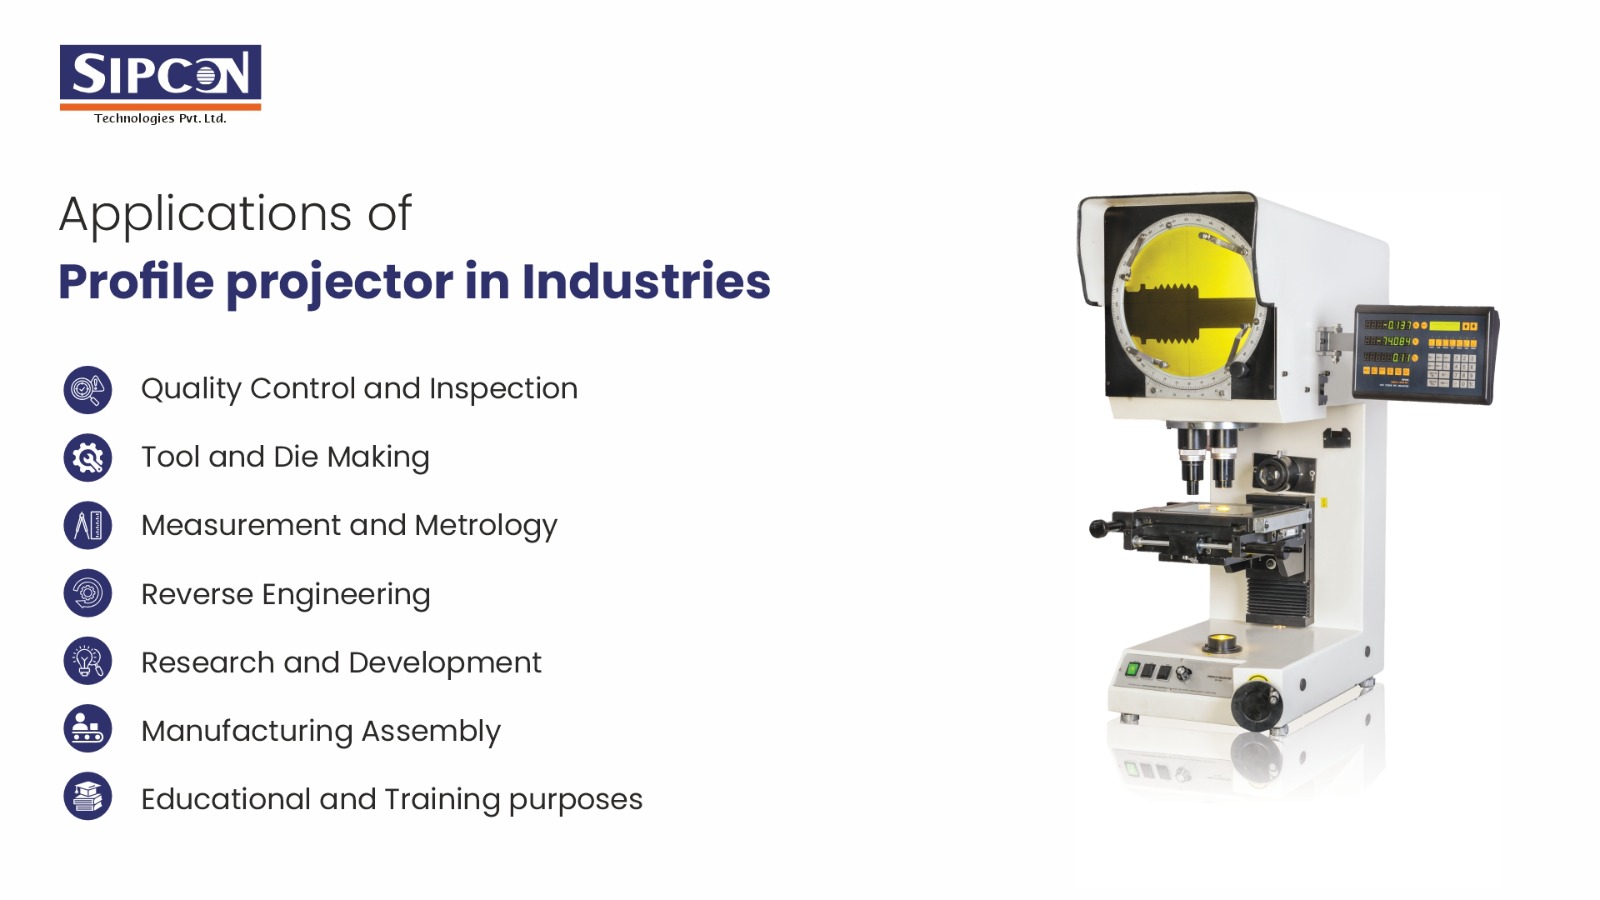 Understanding the Applications of Profile Projectors in Industries